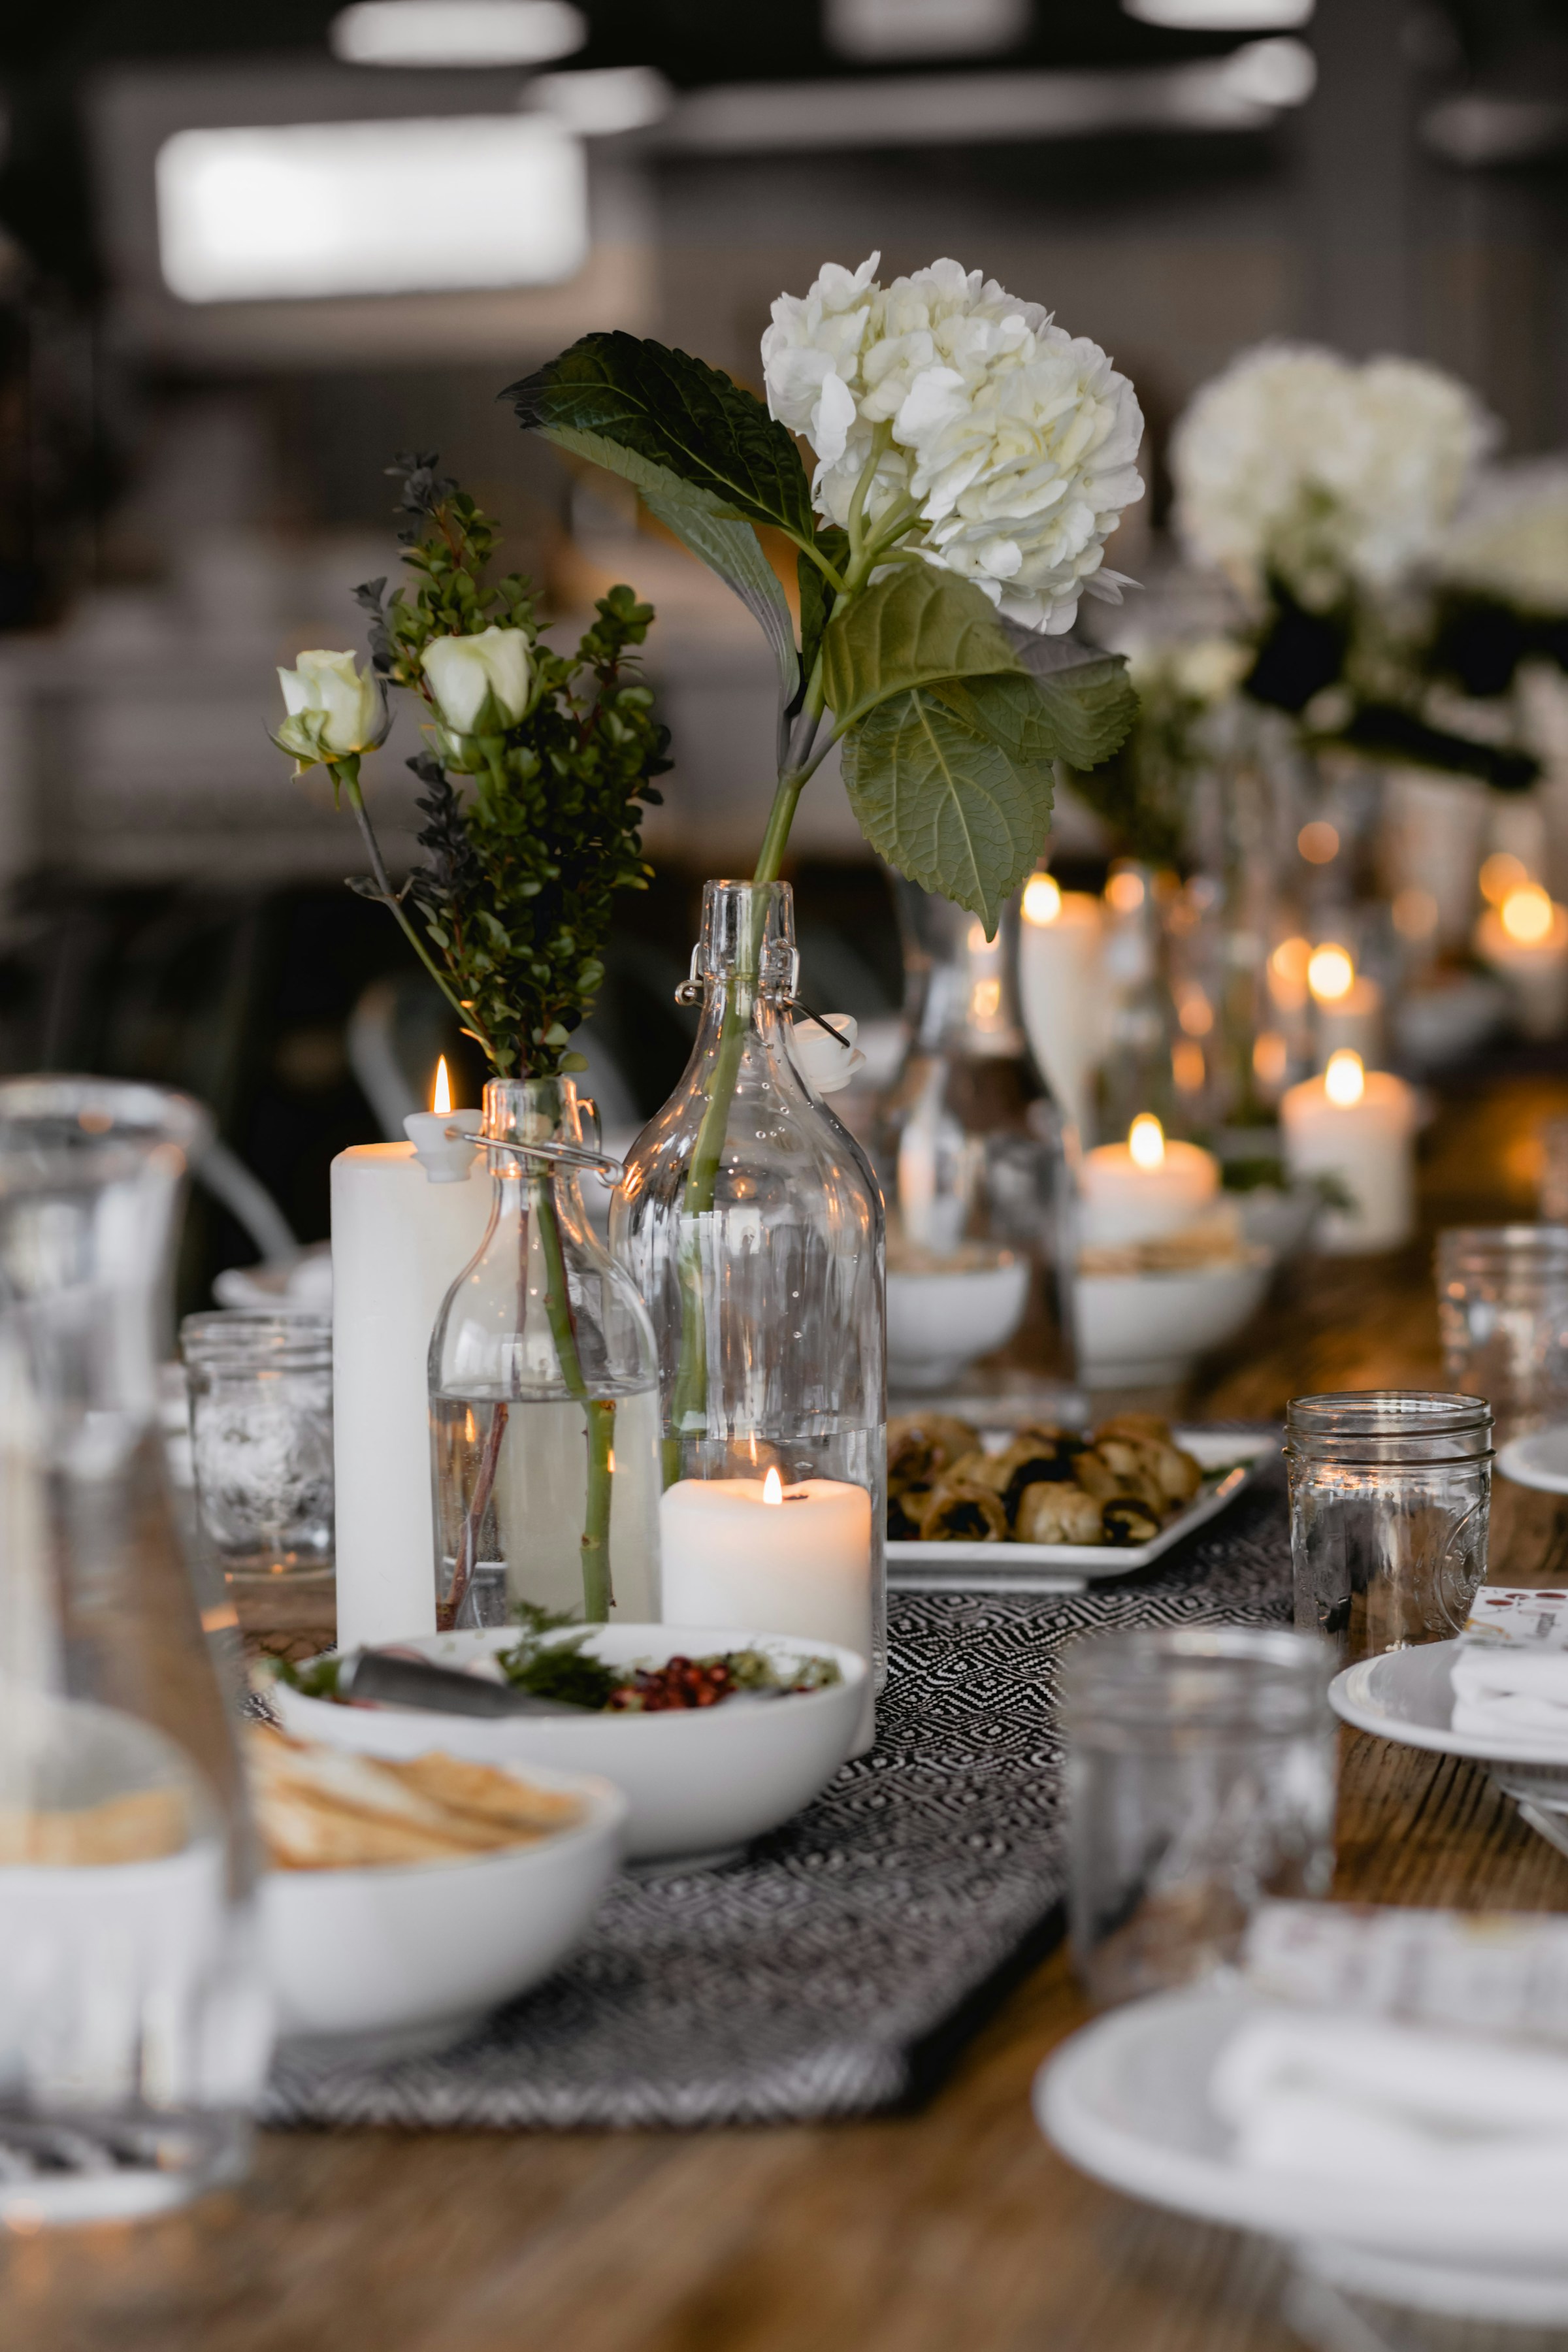 A fancy table setting | Source: Unsplash